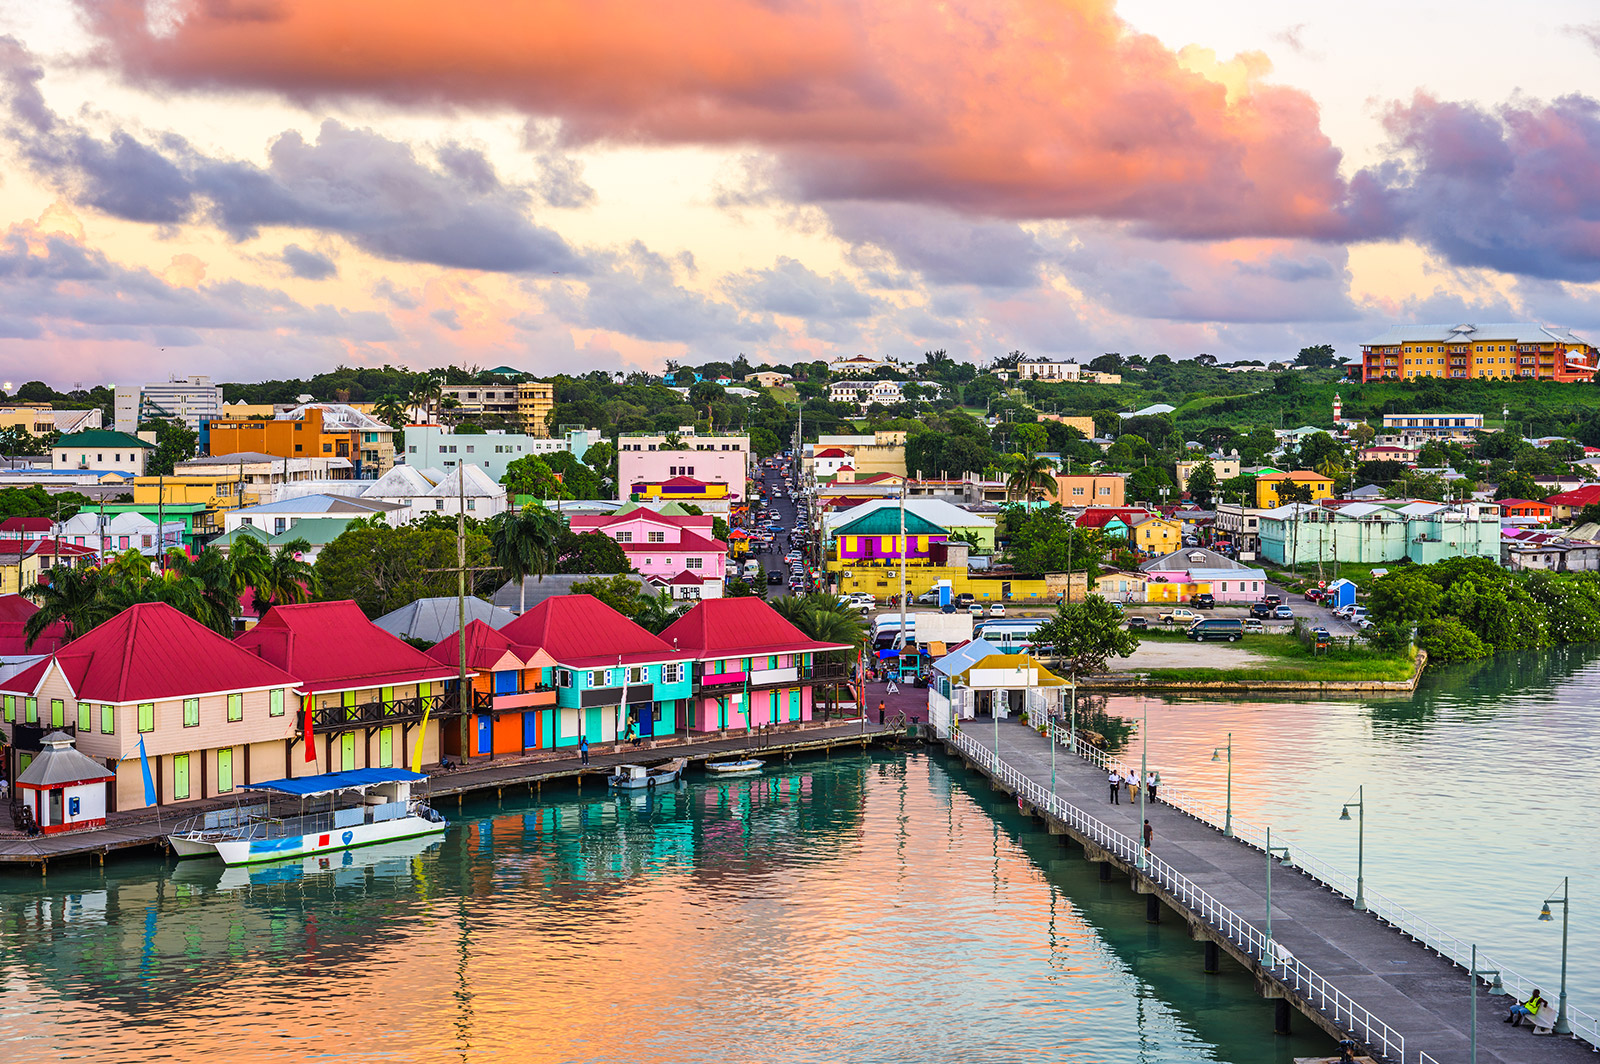 St. John's, Antigua, Antigua and Barbuda